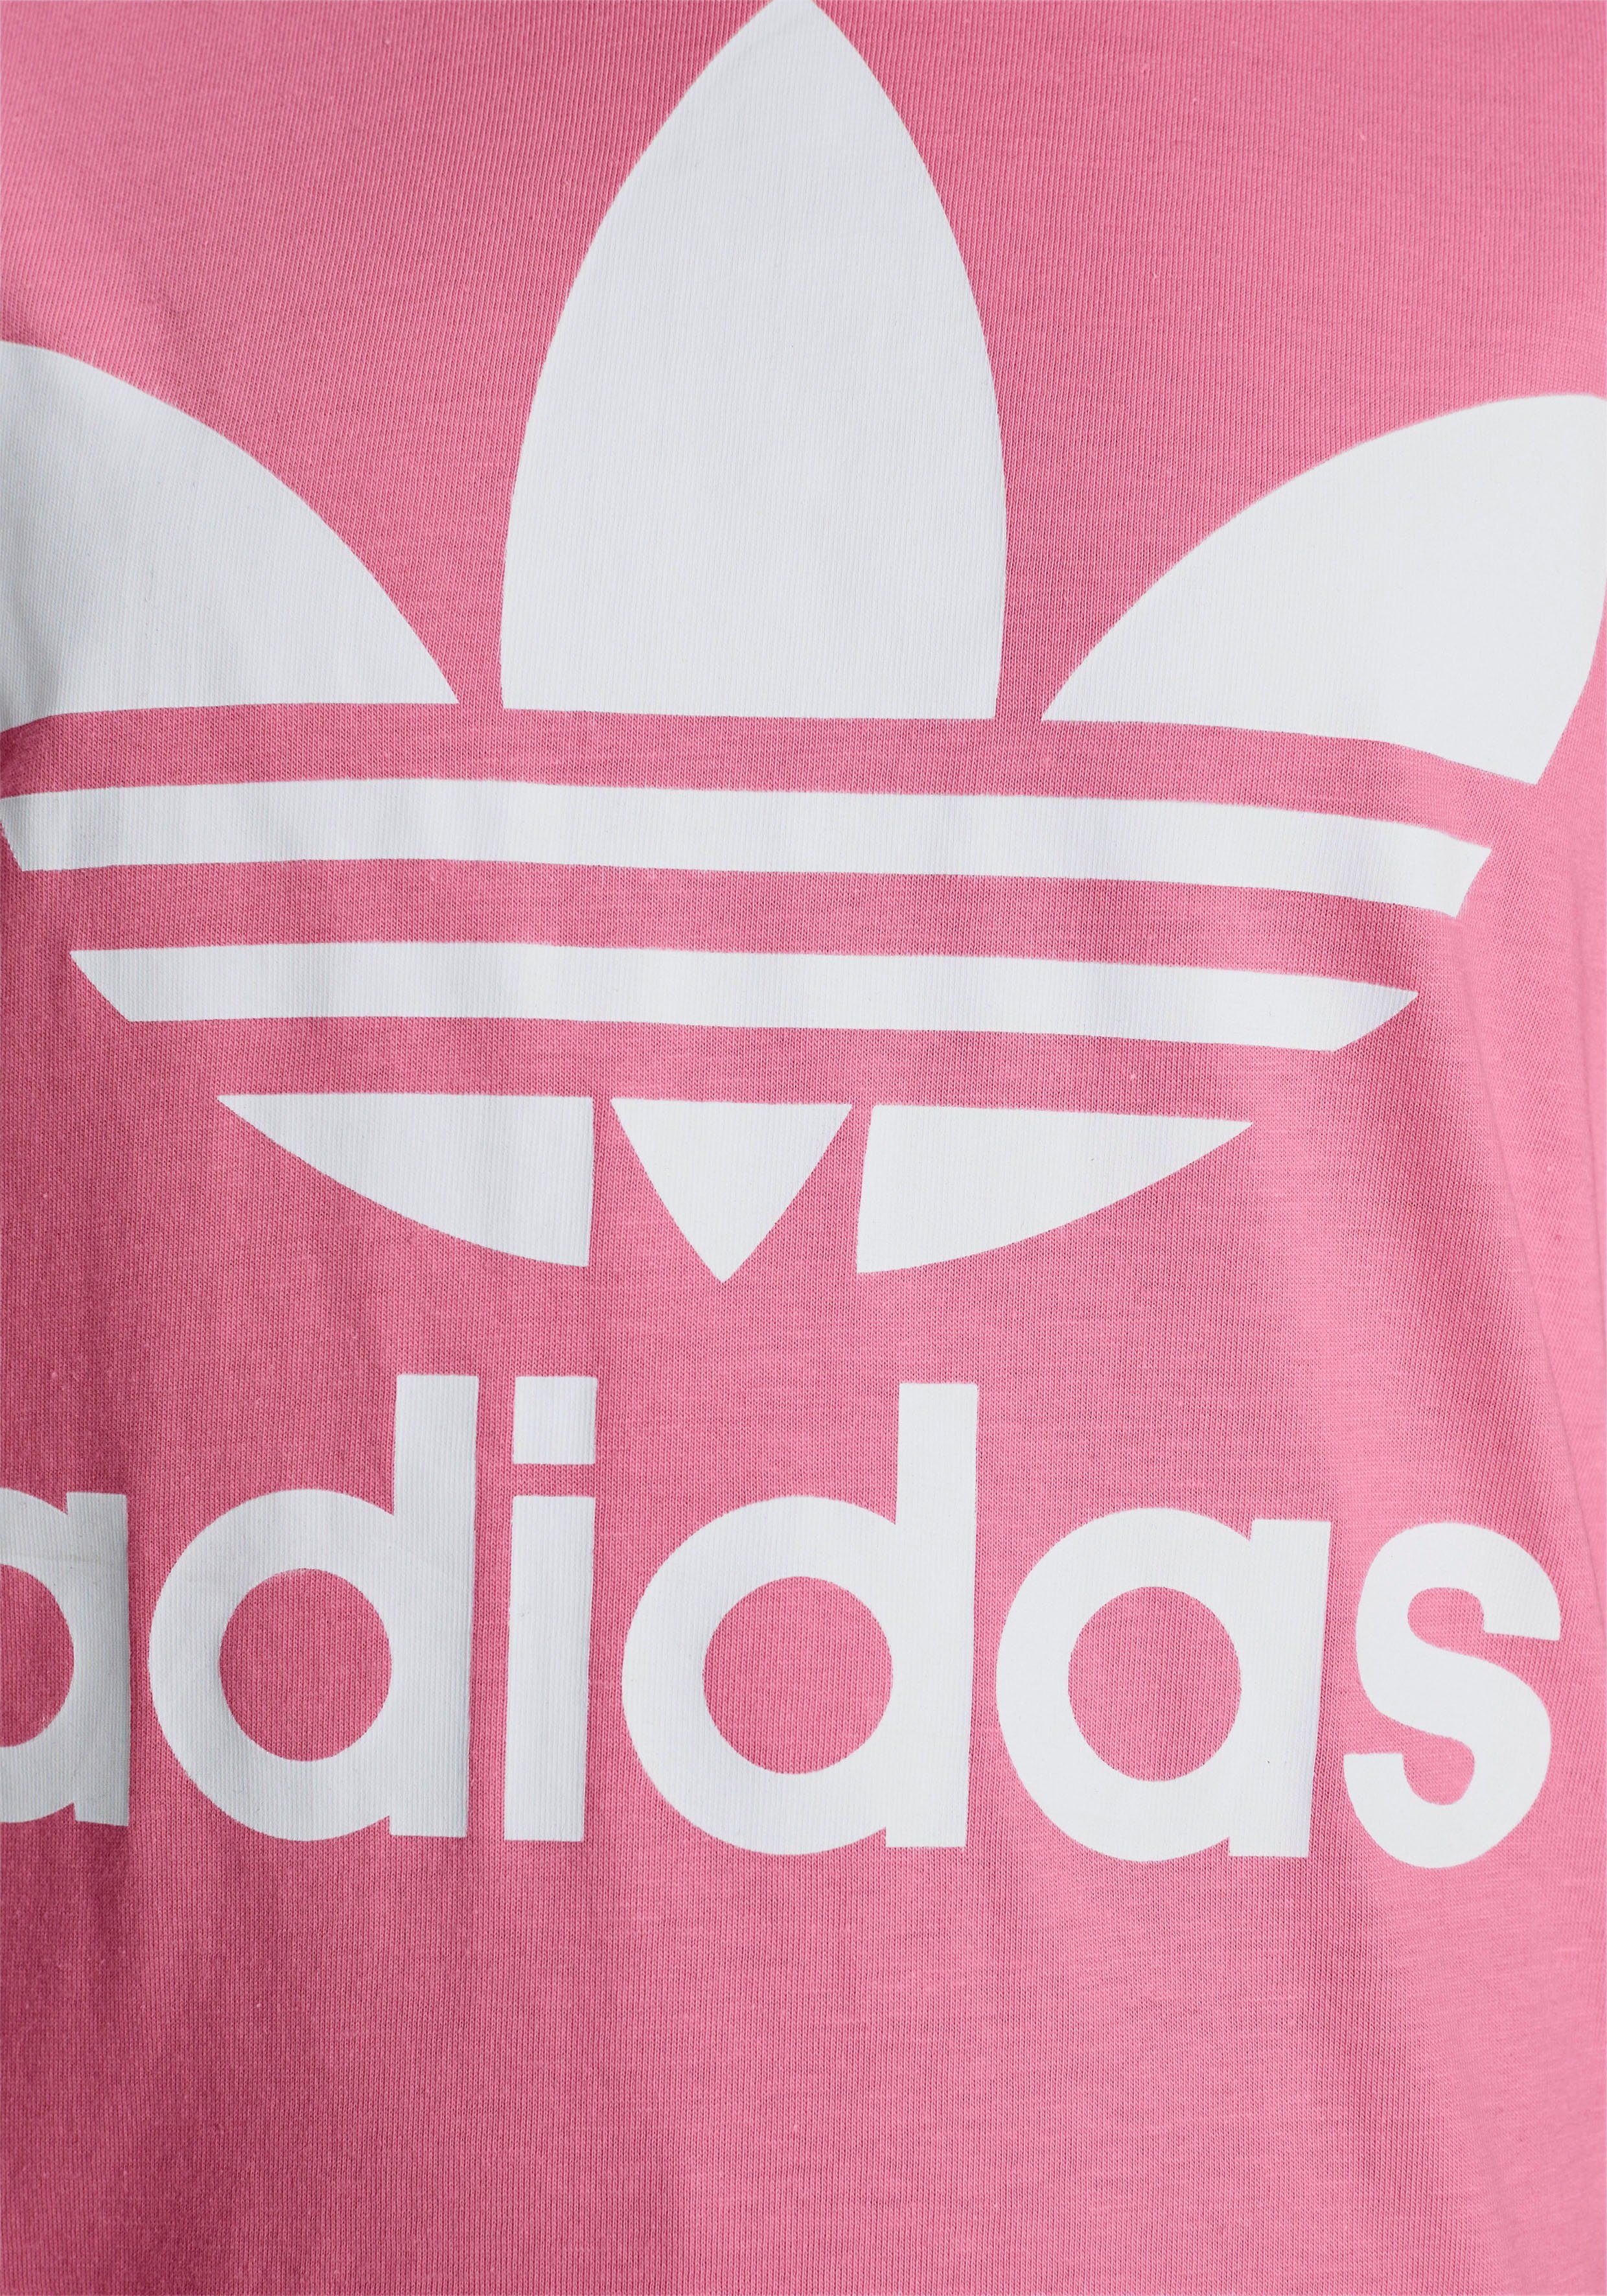 adidas Originals T-Shirt TREFOIL TEE / Bliss White Pink Unisex